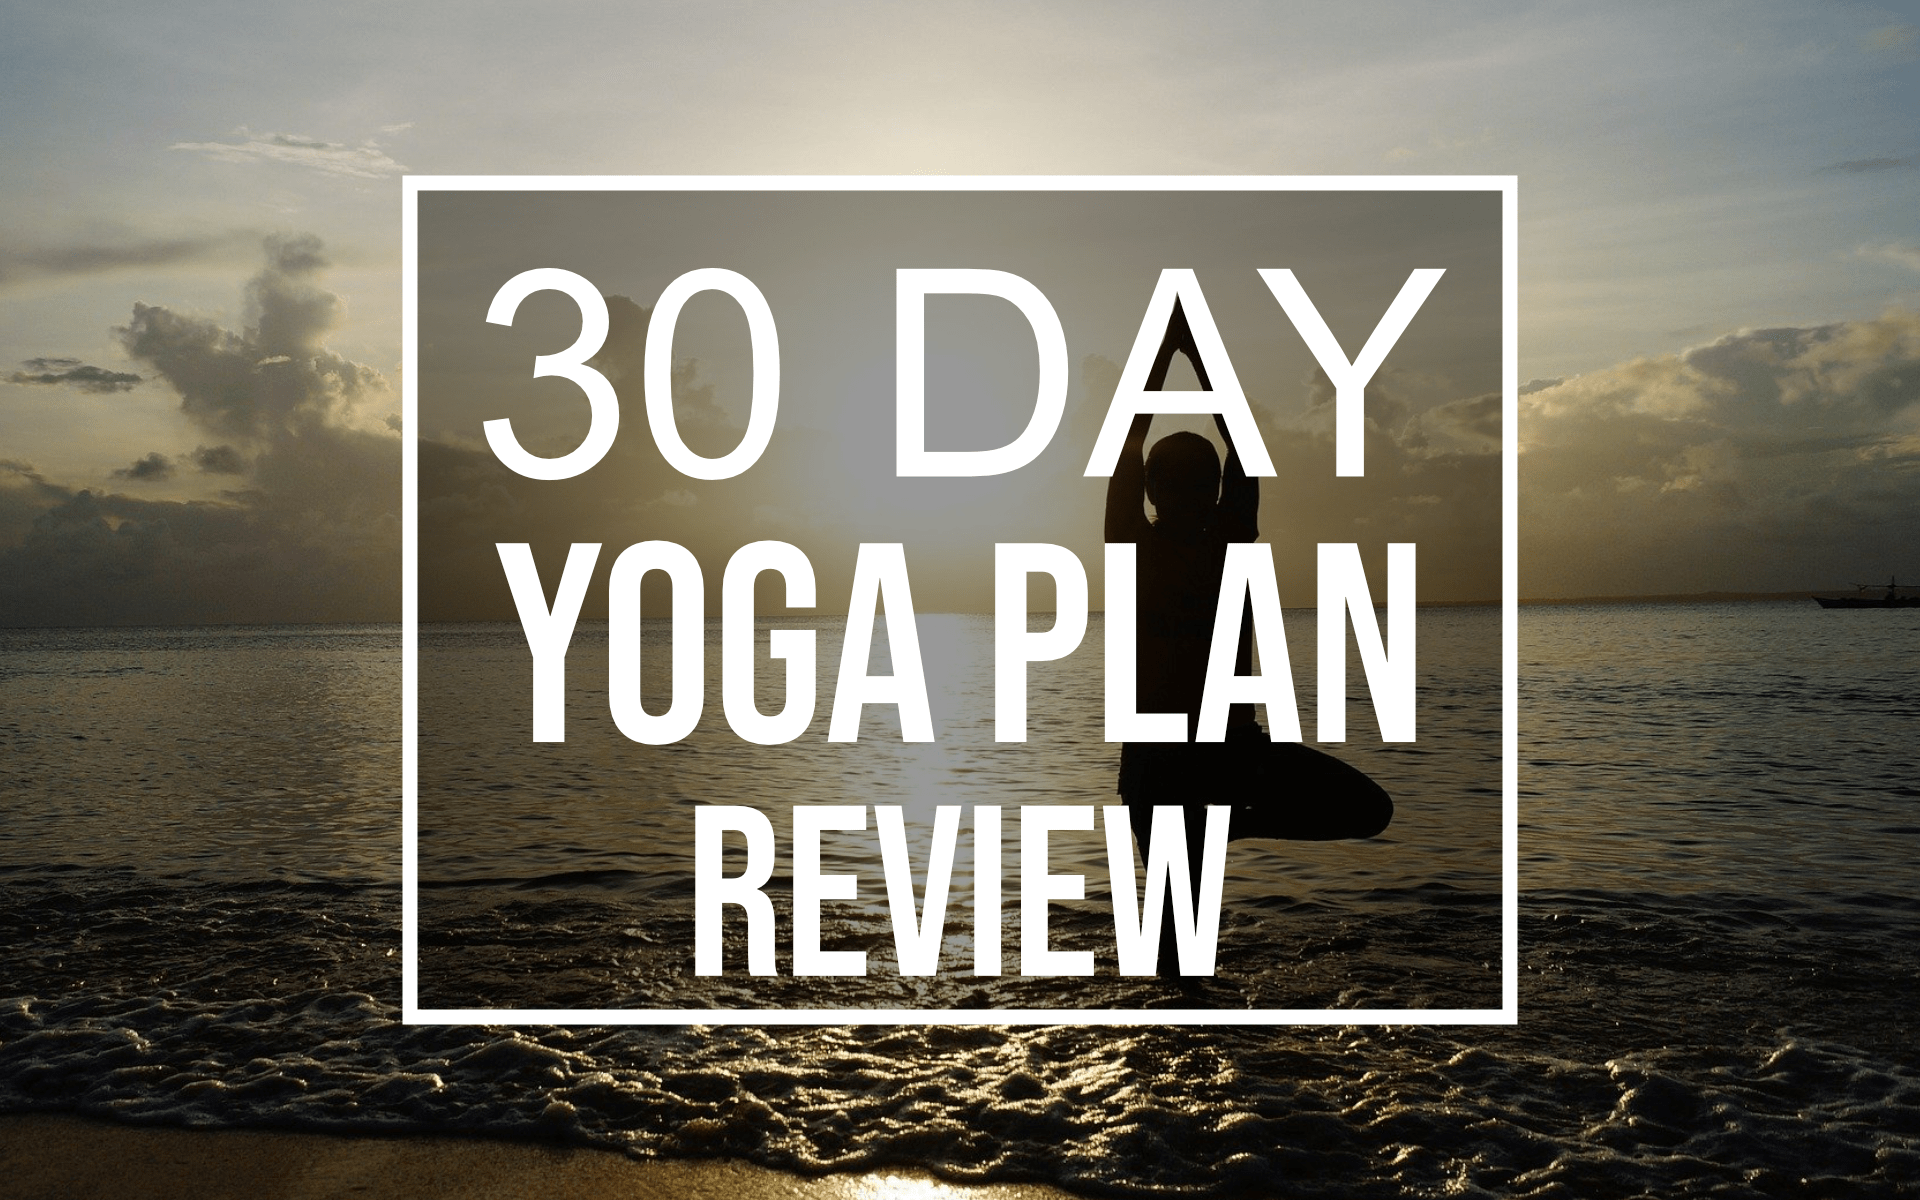 30 day yoga plan review